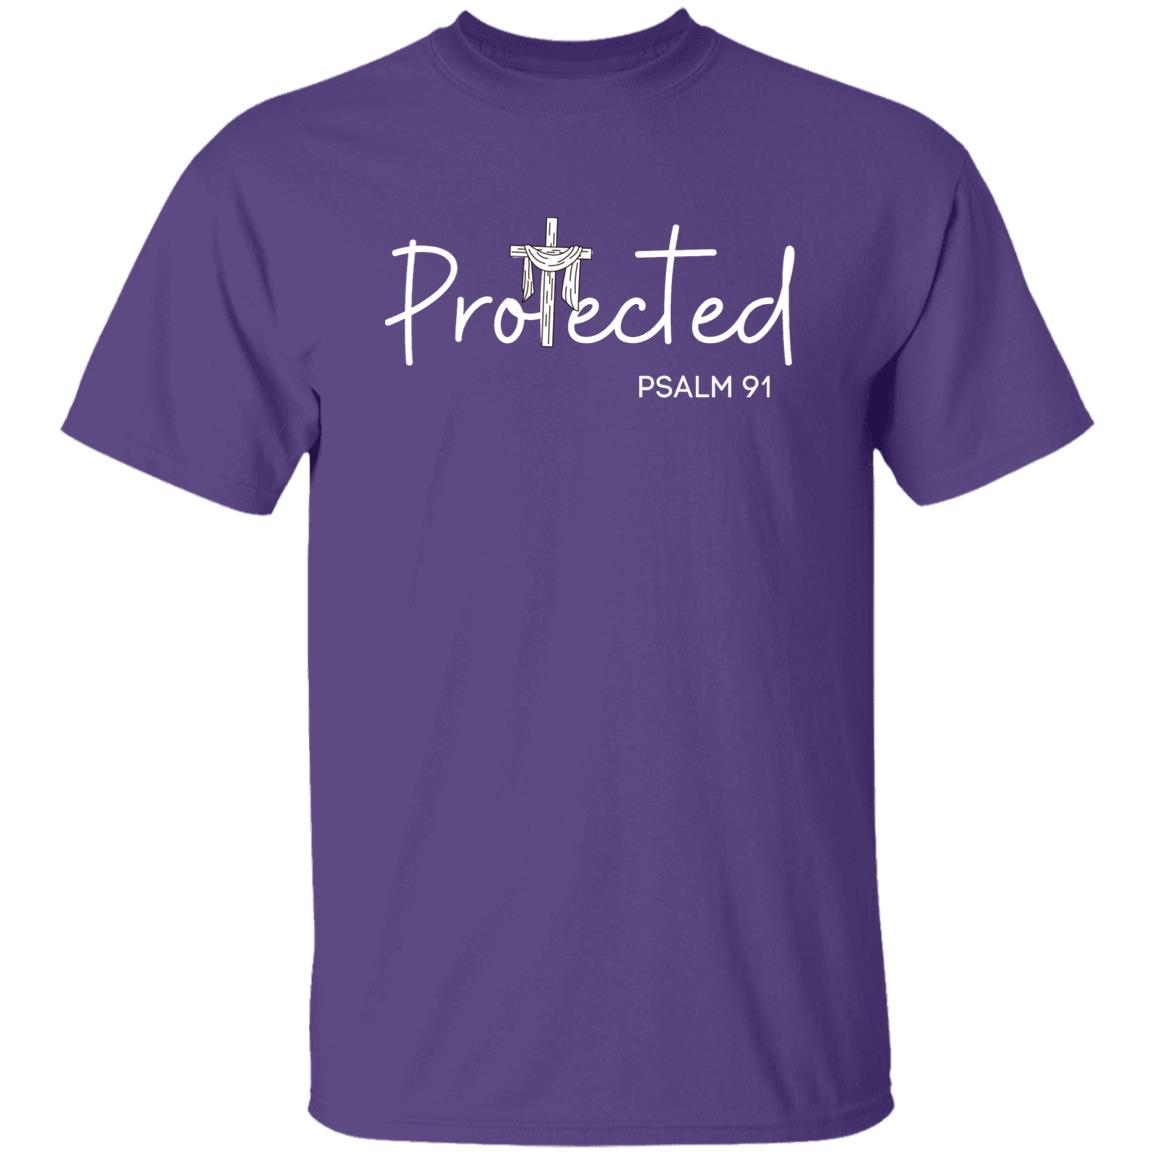 Protected T-Shirt-Psaml 91